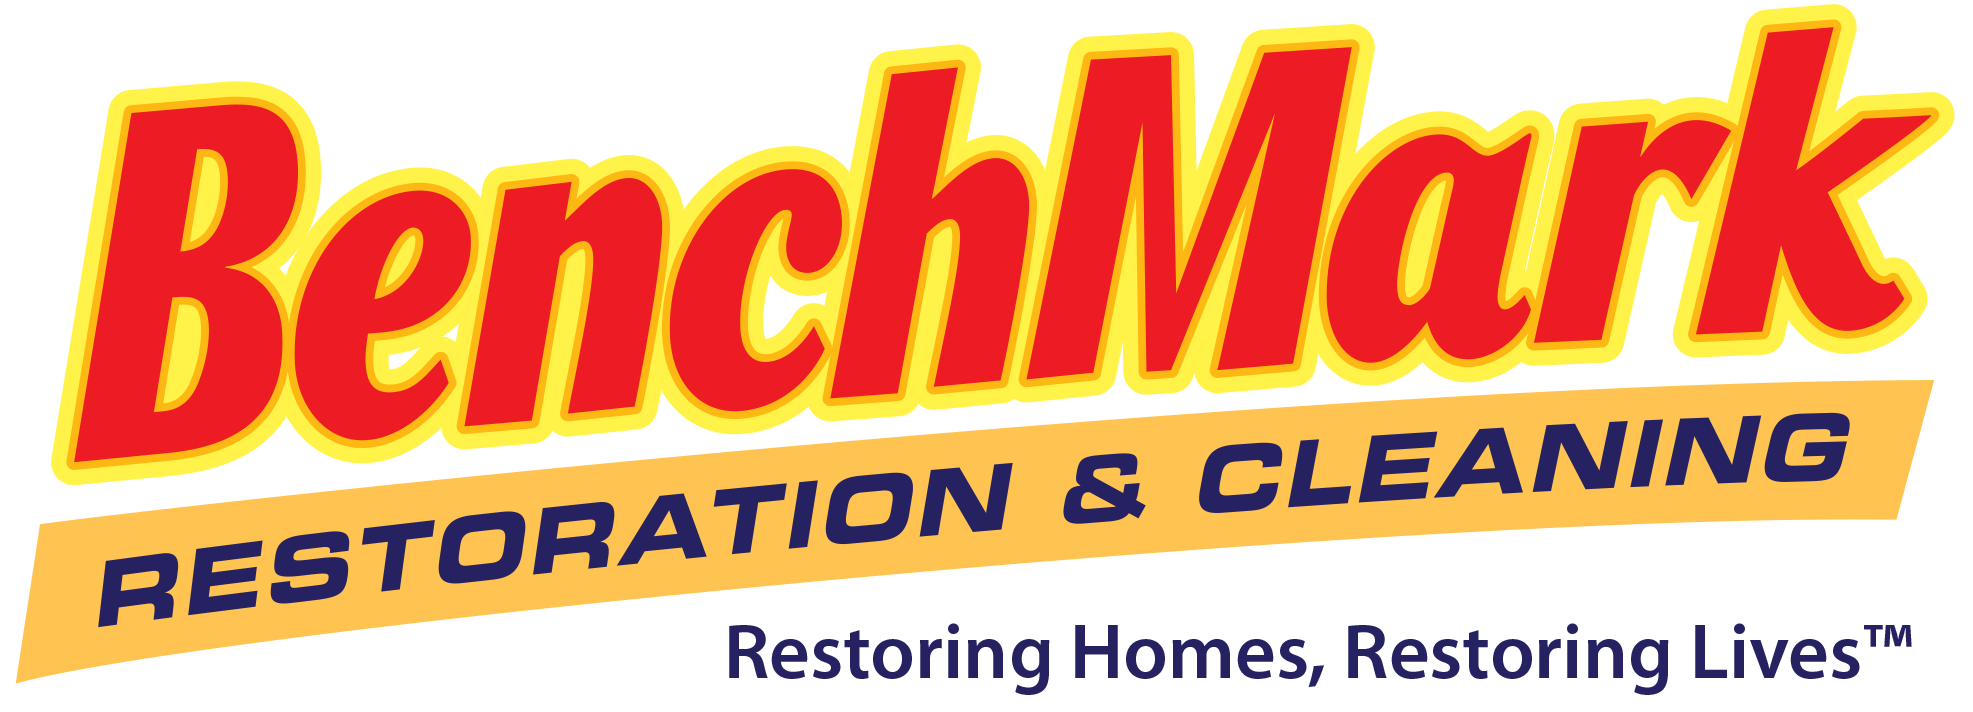 Benchmark Restoration & Cleaning's Logo